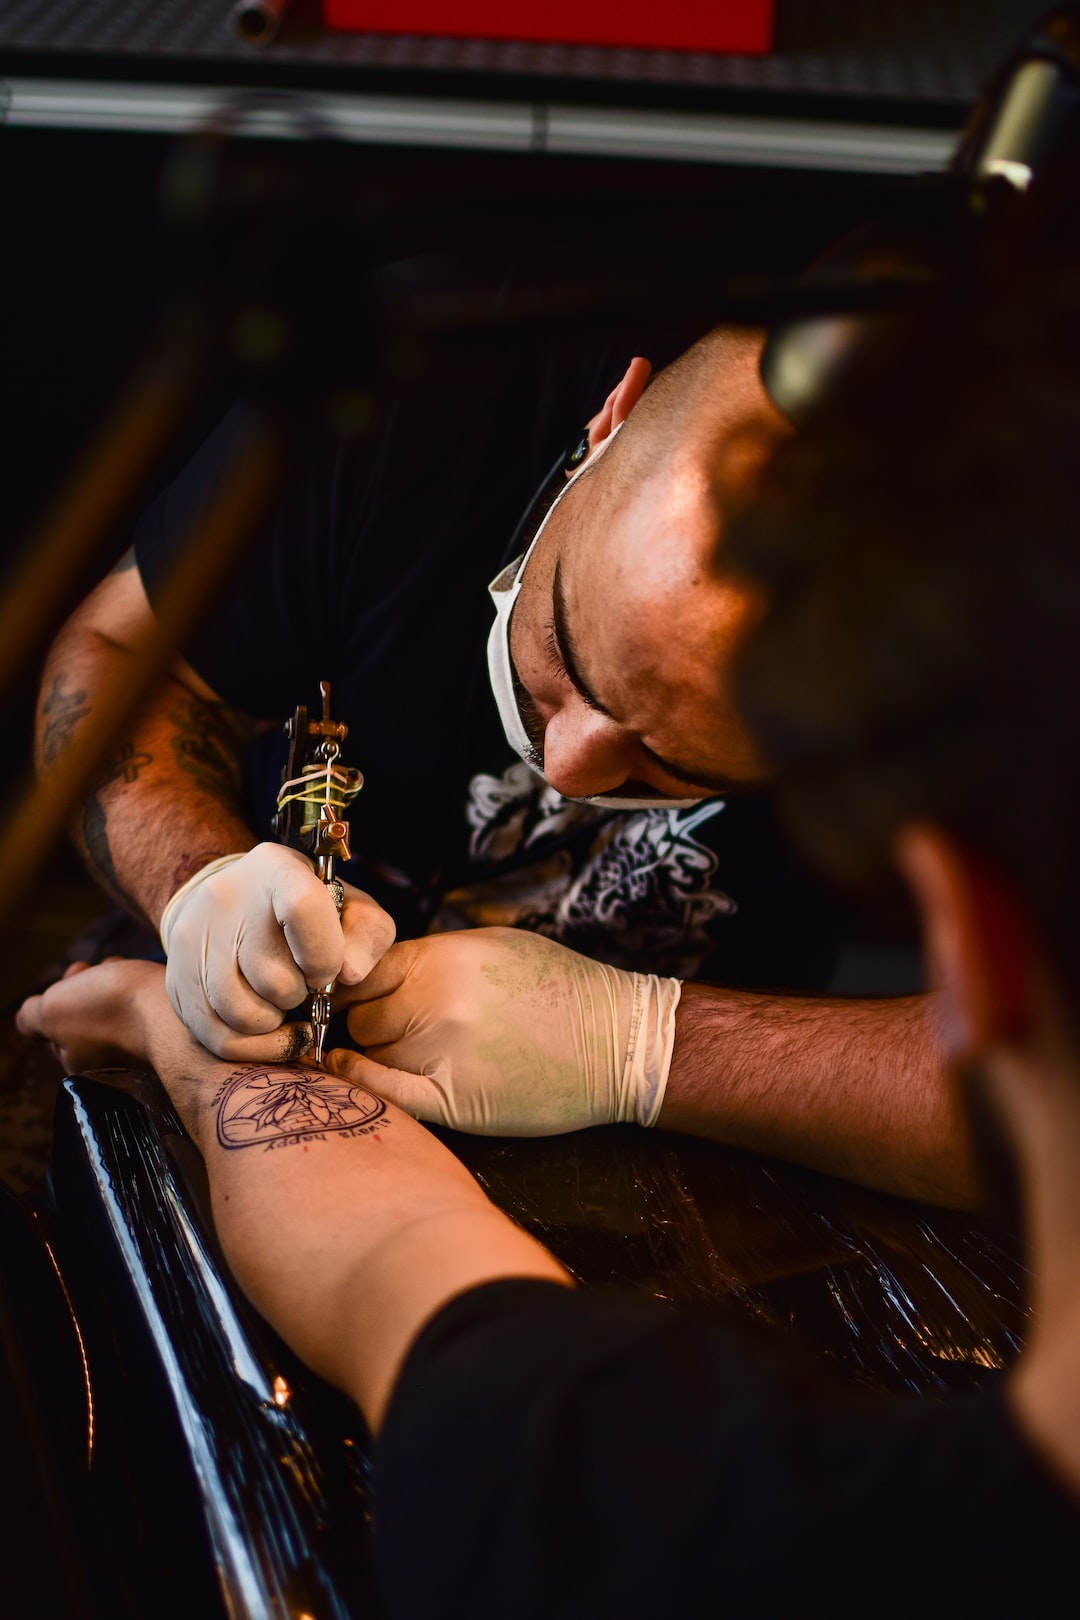 Tattoo Machine Make Drawing on Male Hand. Editorial Photo - Image of  artist, needle: 111359646